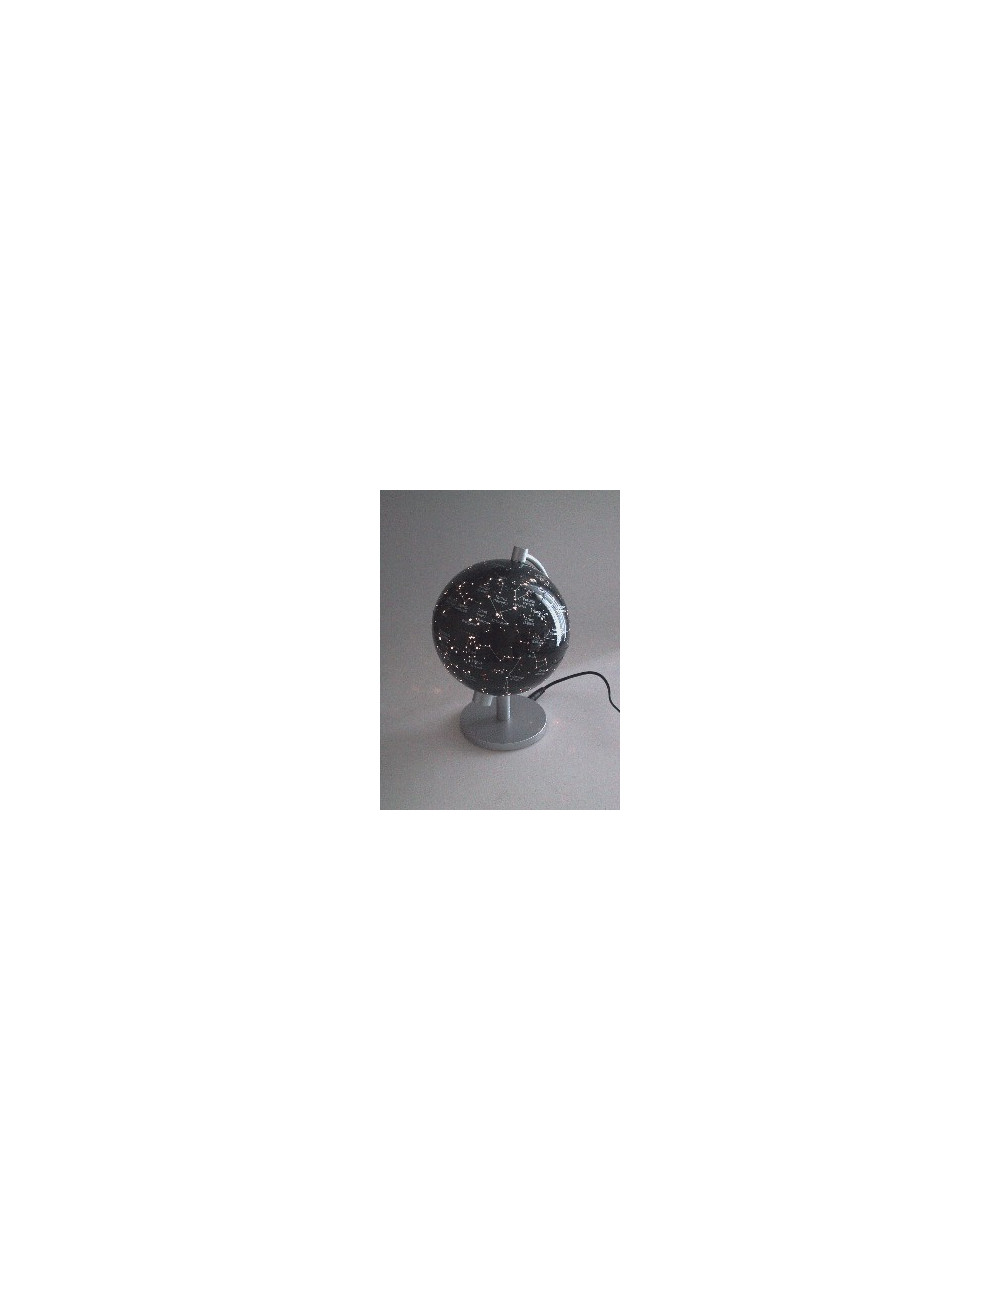 Mini globe céleste lumineux - 13 cm